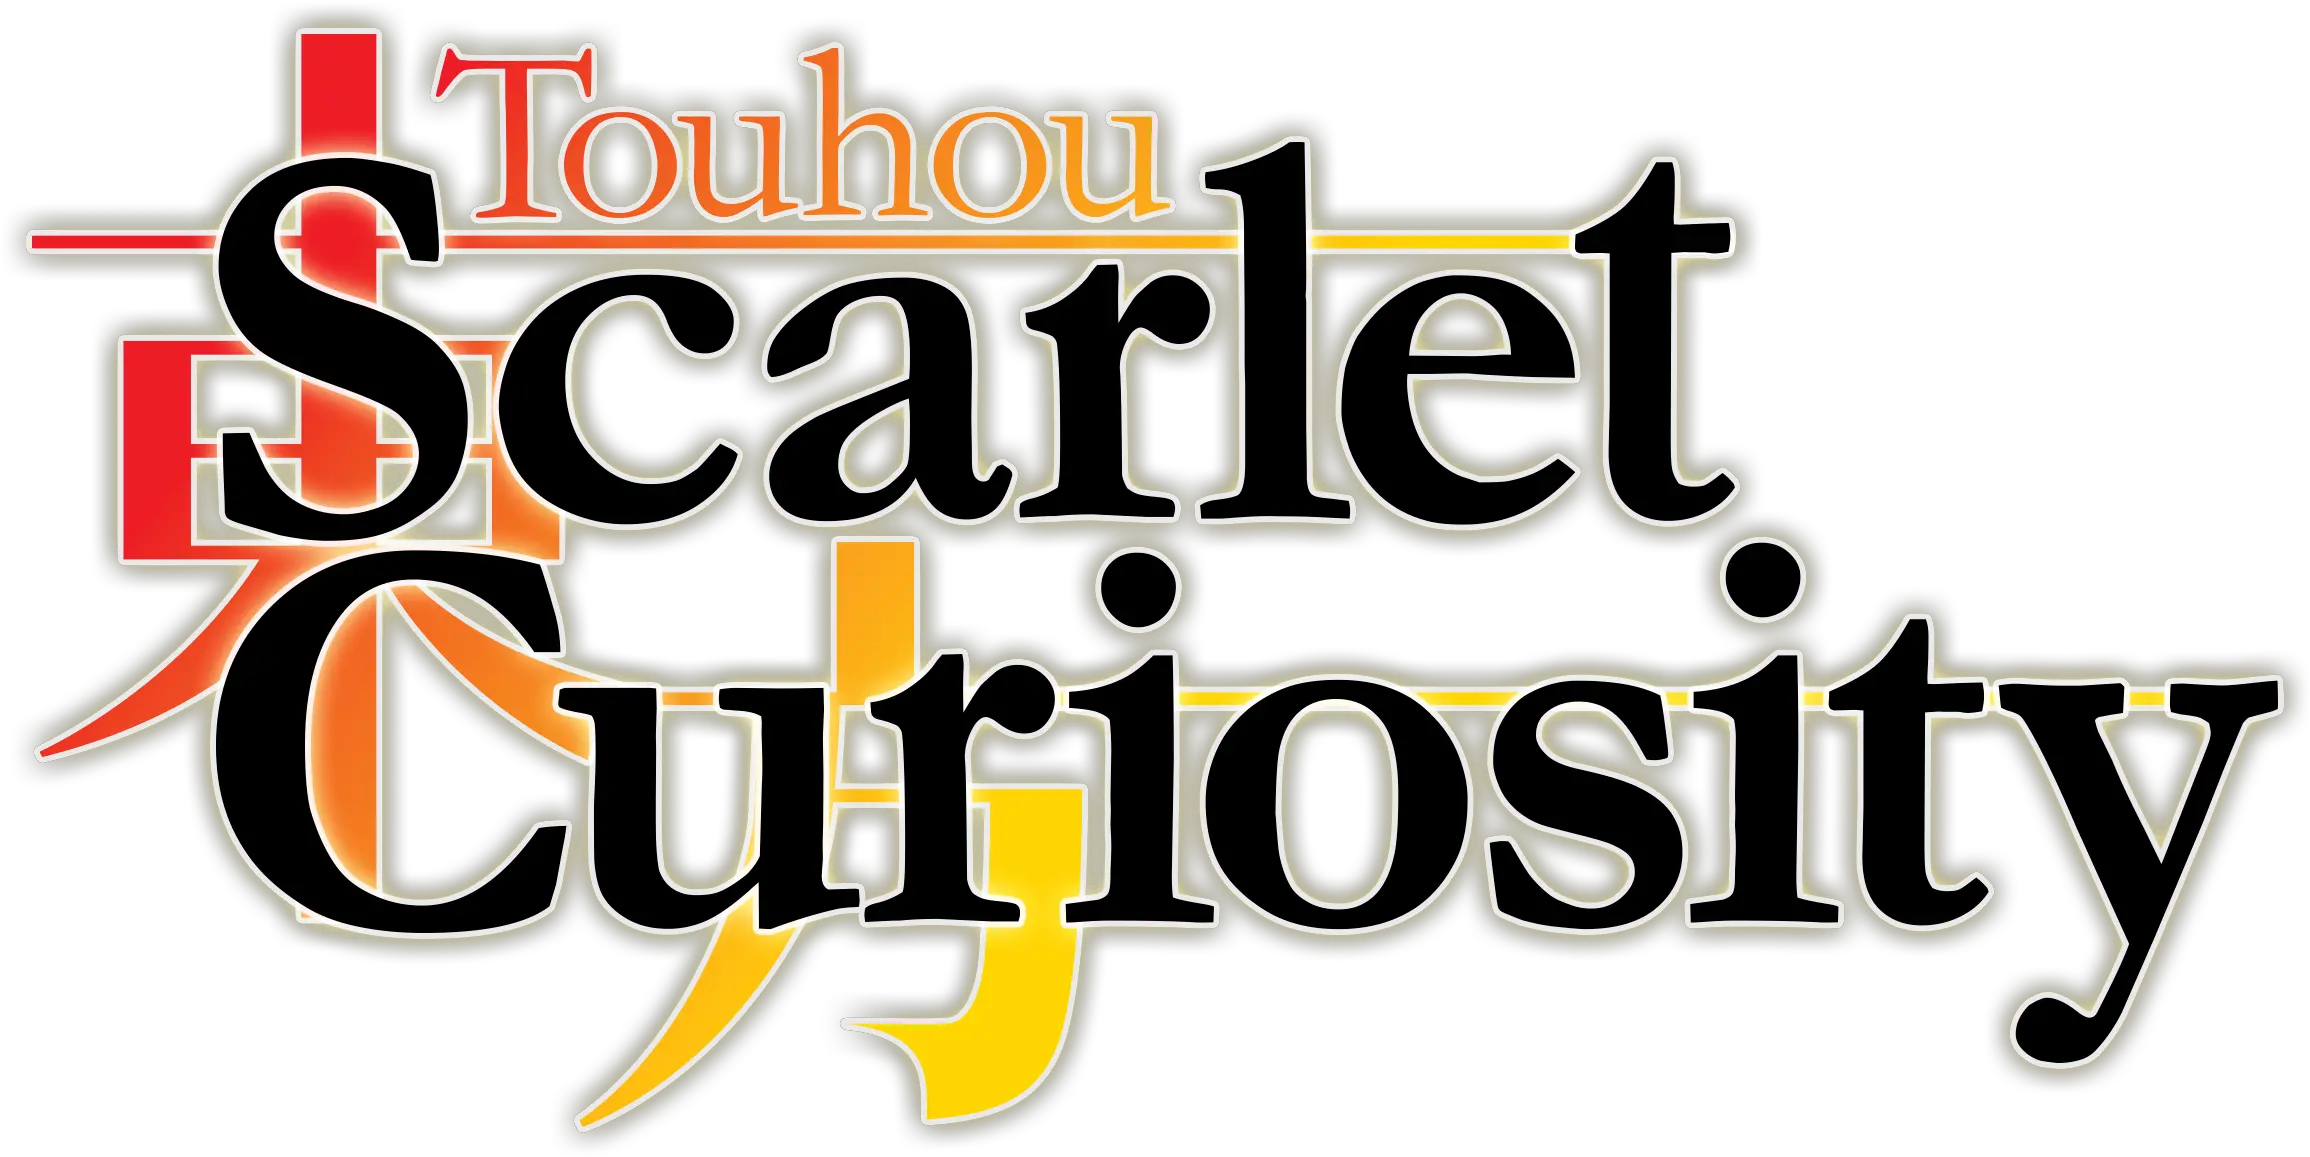 Scarlet Curiosity Touhou Scarlet Curiosity Logo Png Touhou Logo